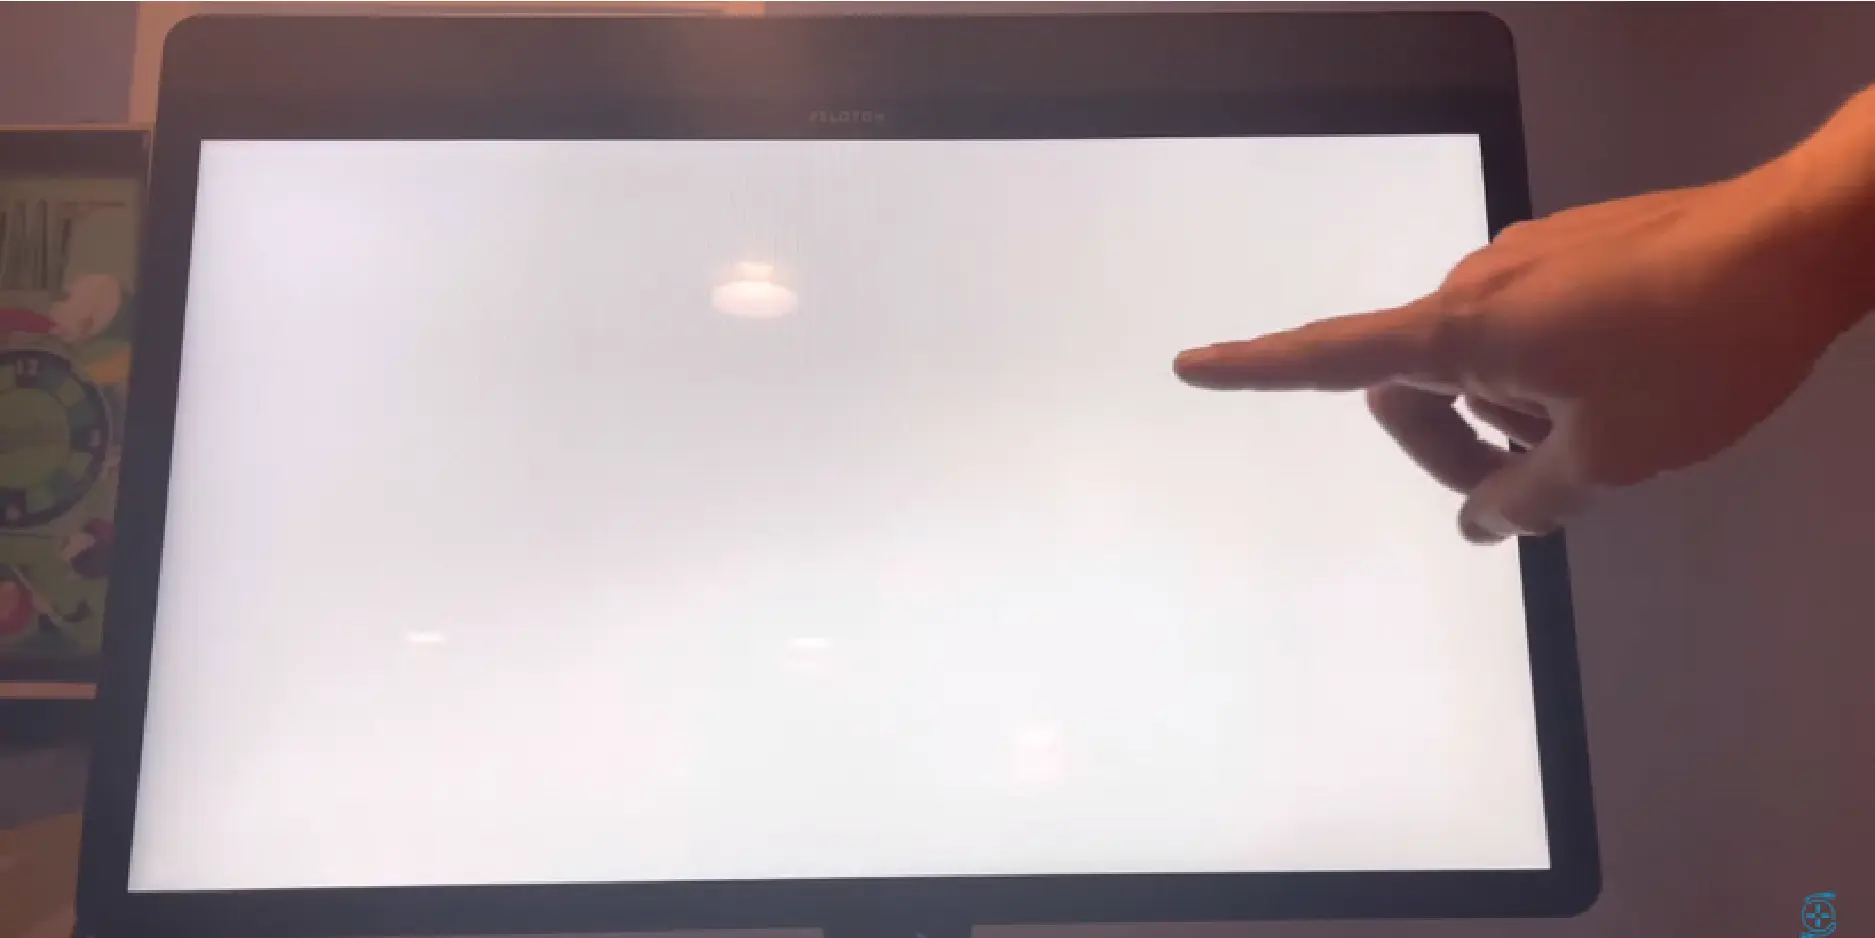 How To Fix The Flashing White Screen on a Peloton